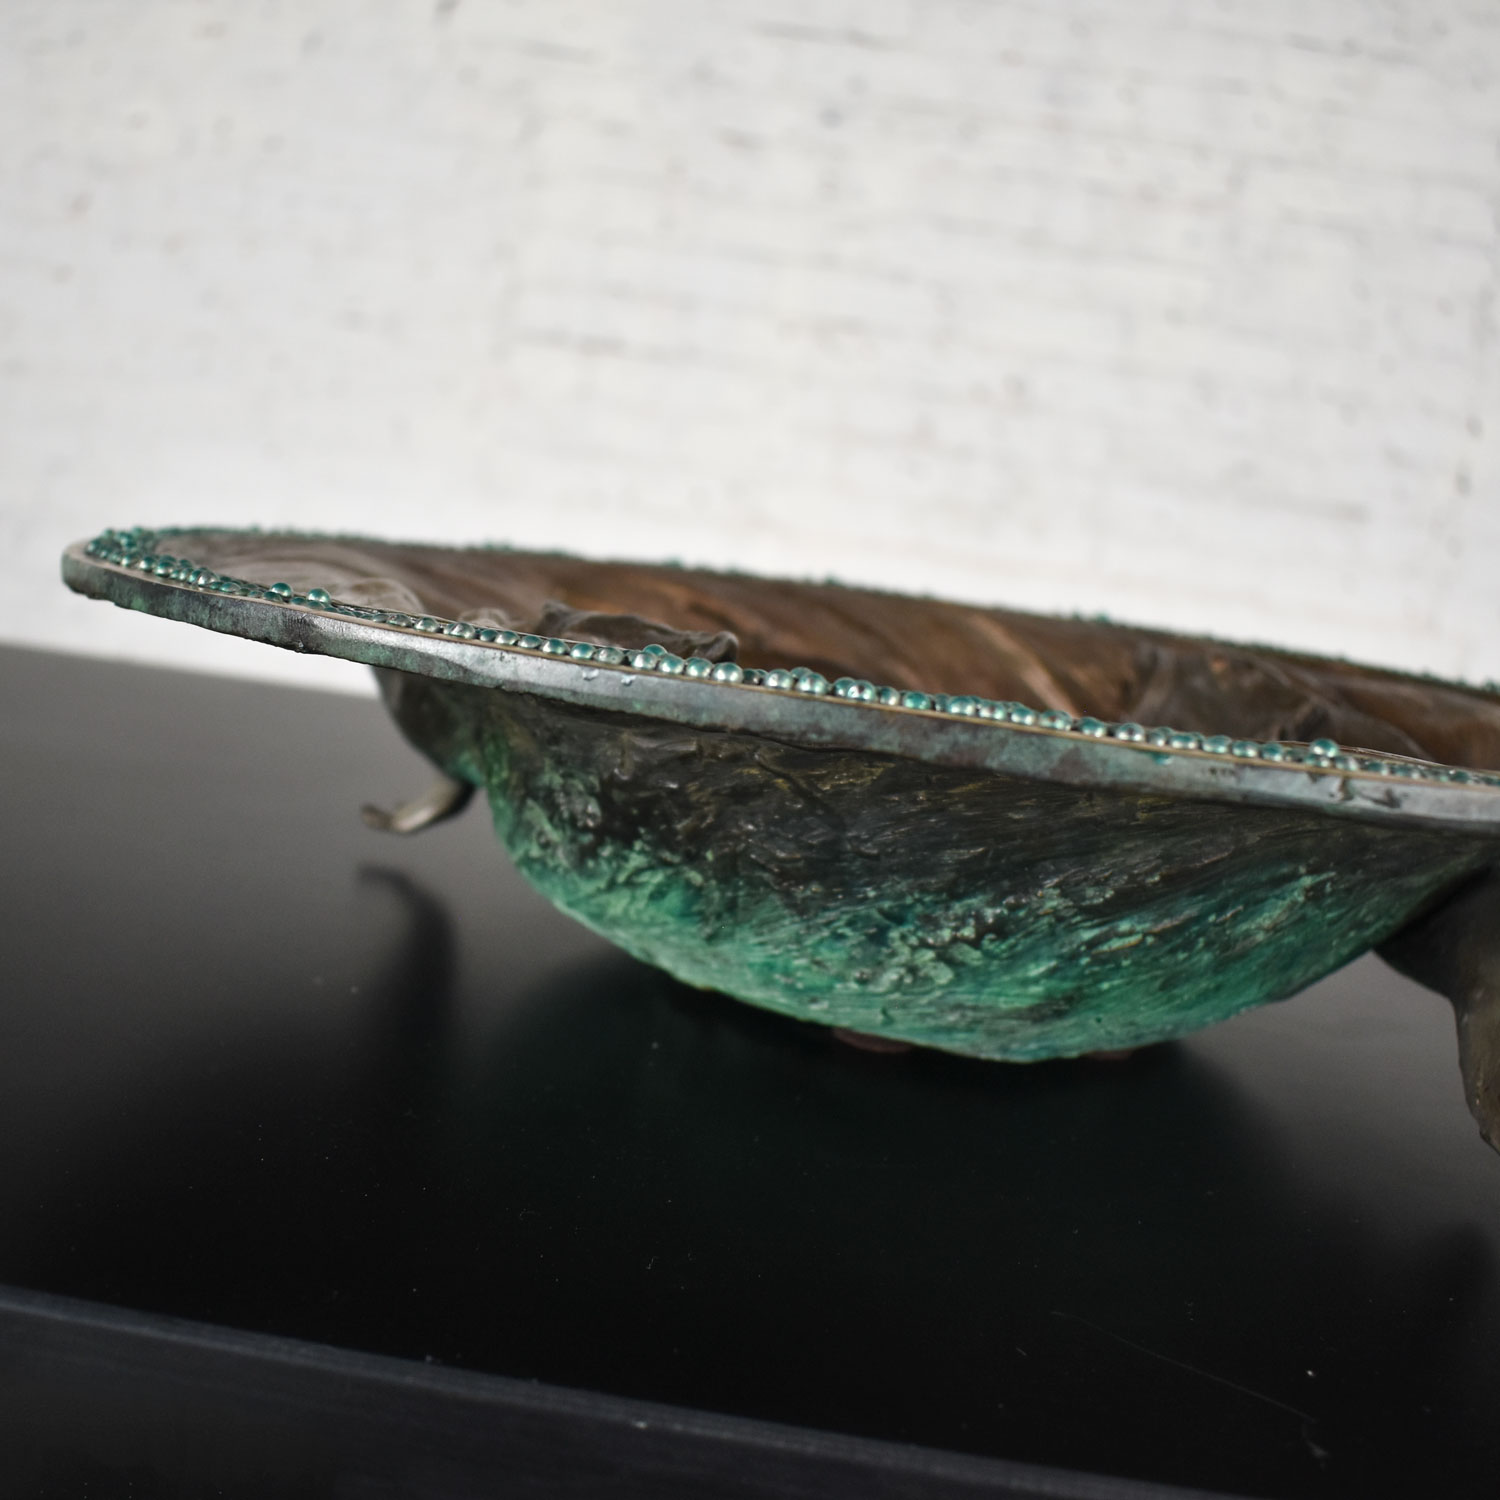 Organic Modern Cast Bronze Bowl Sculpture with Fish Design by John Forsythe